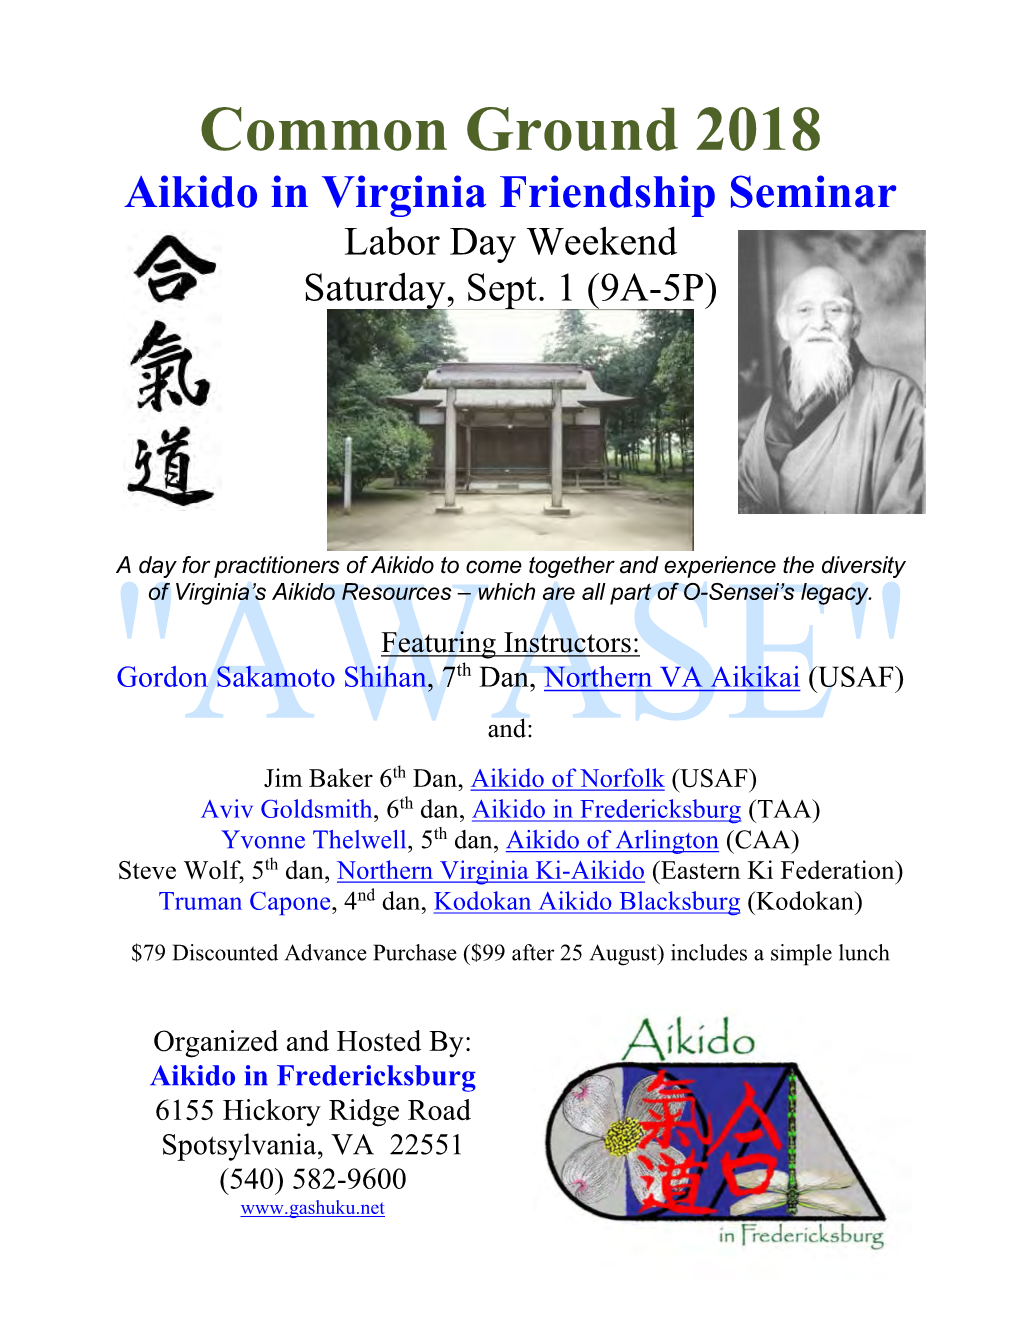 Common Ground – Aikido in Virginia 2018 Friendship Seminar – Application/Waiver